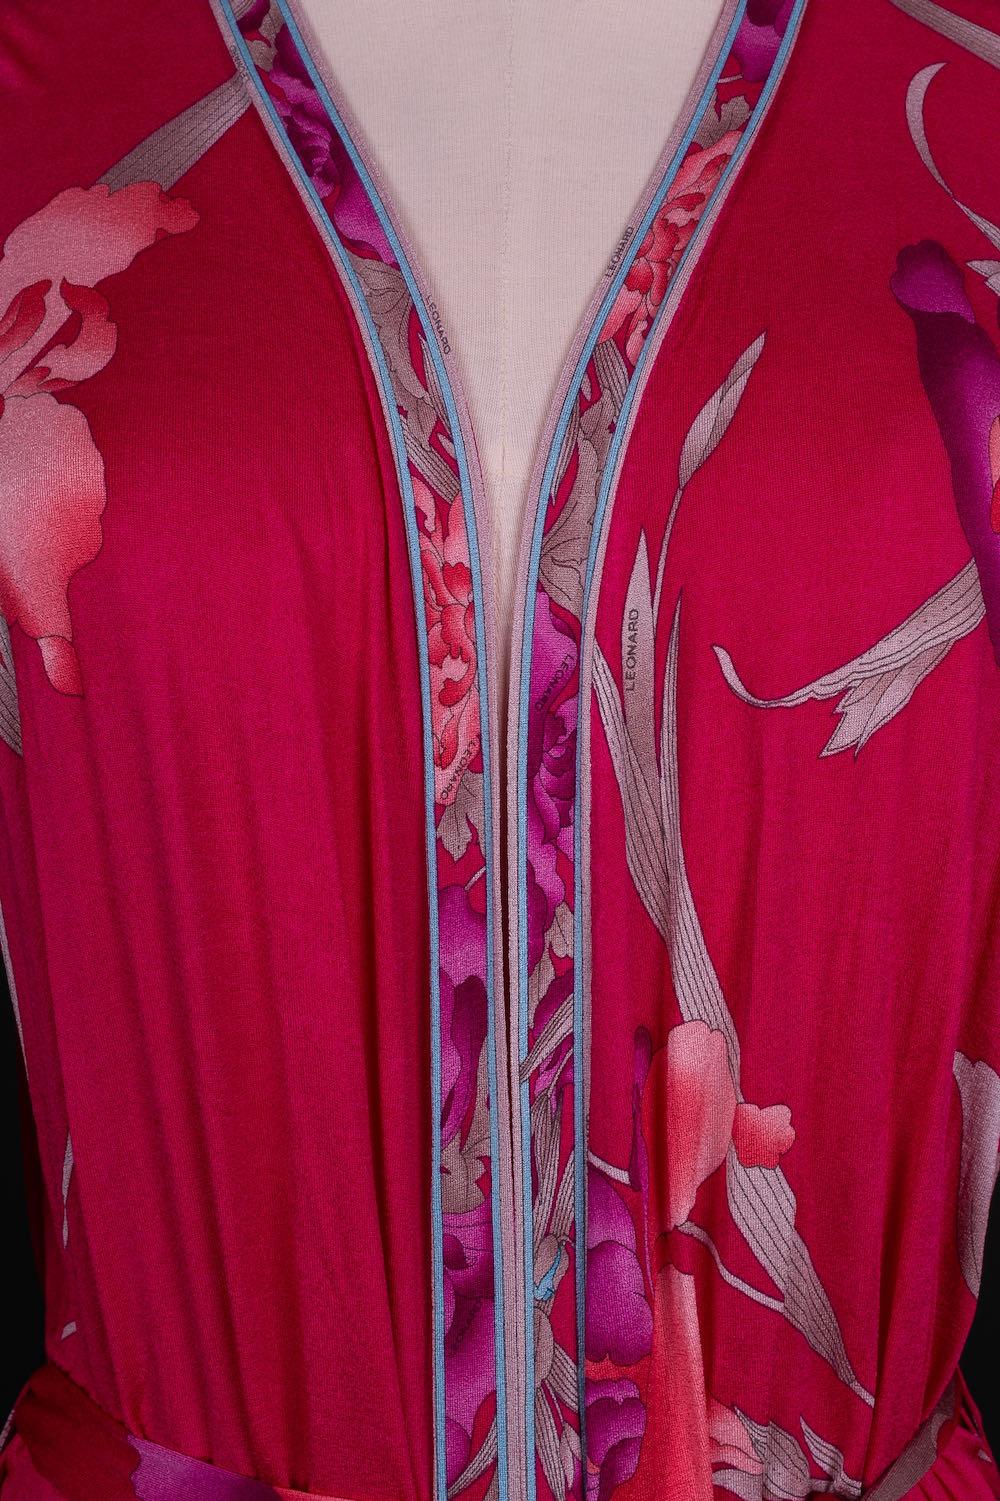 Leonard Floral Print Dress on Fuchsia Pink Background For Sale 1